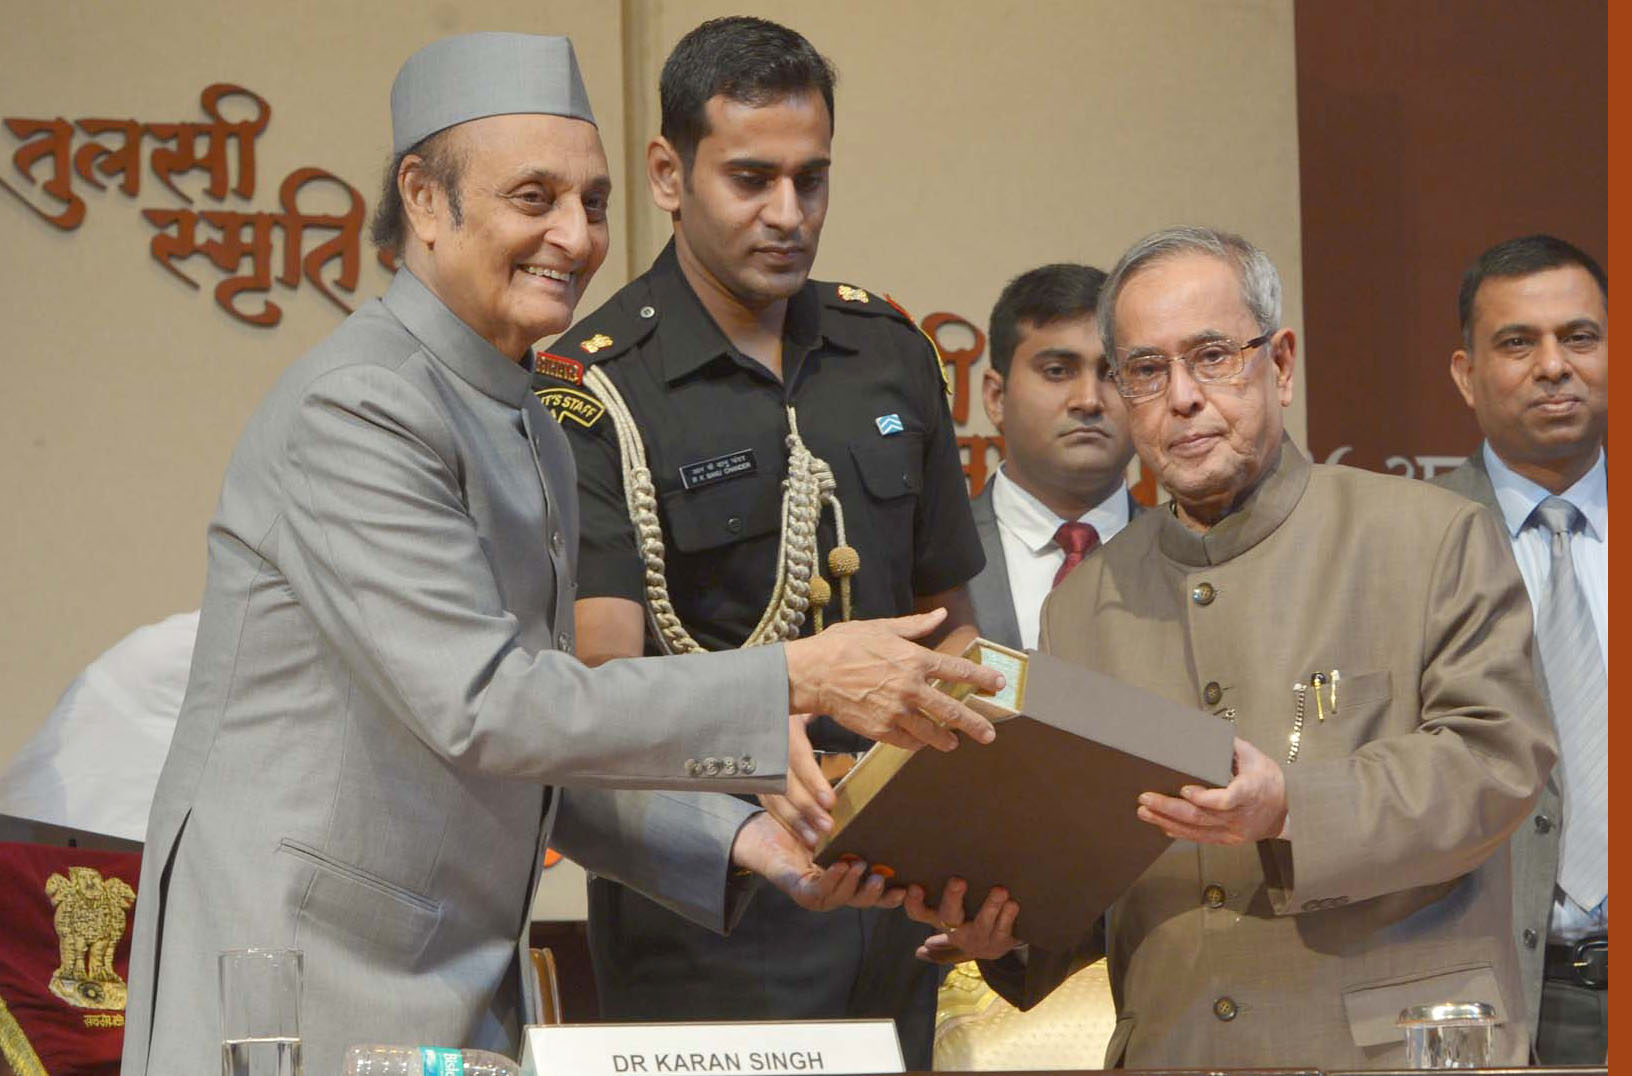 President Pranab Mukherjee receiving  “Tulsi Smriti Granth”